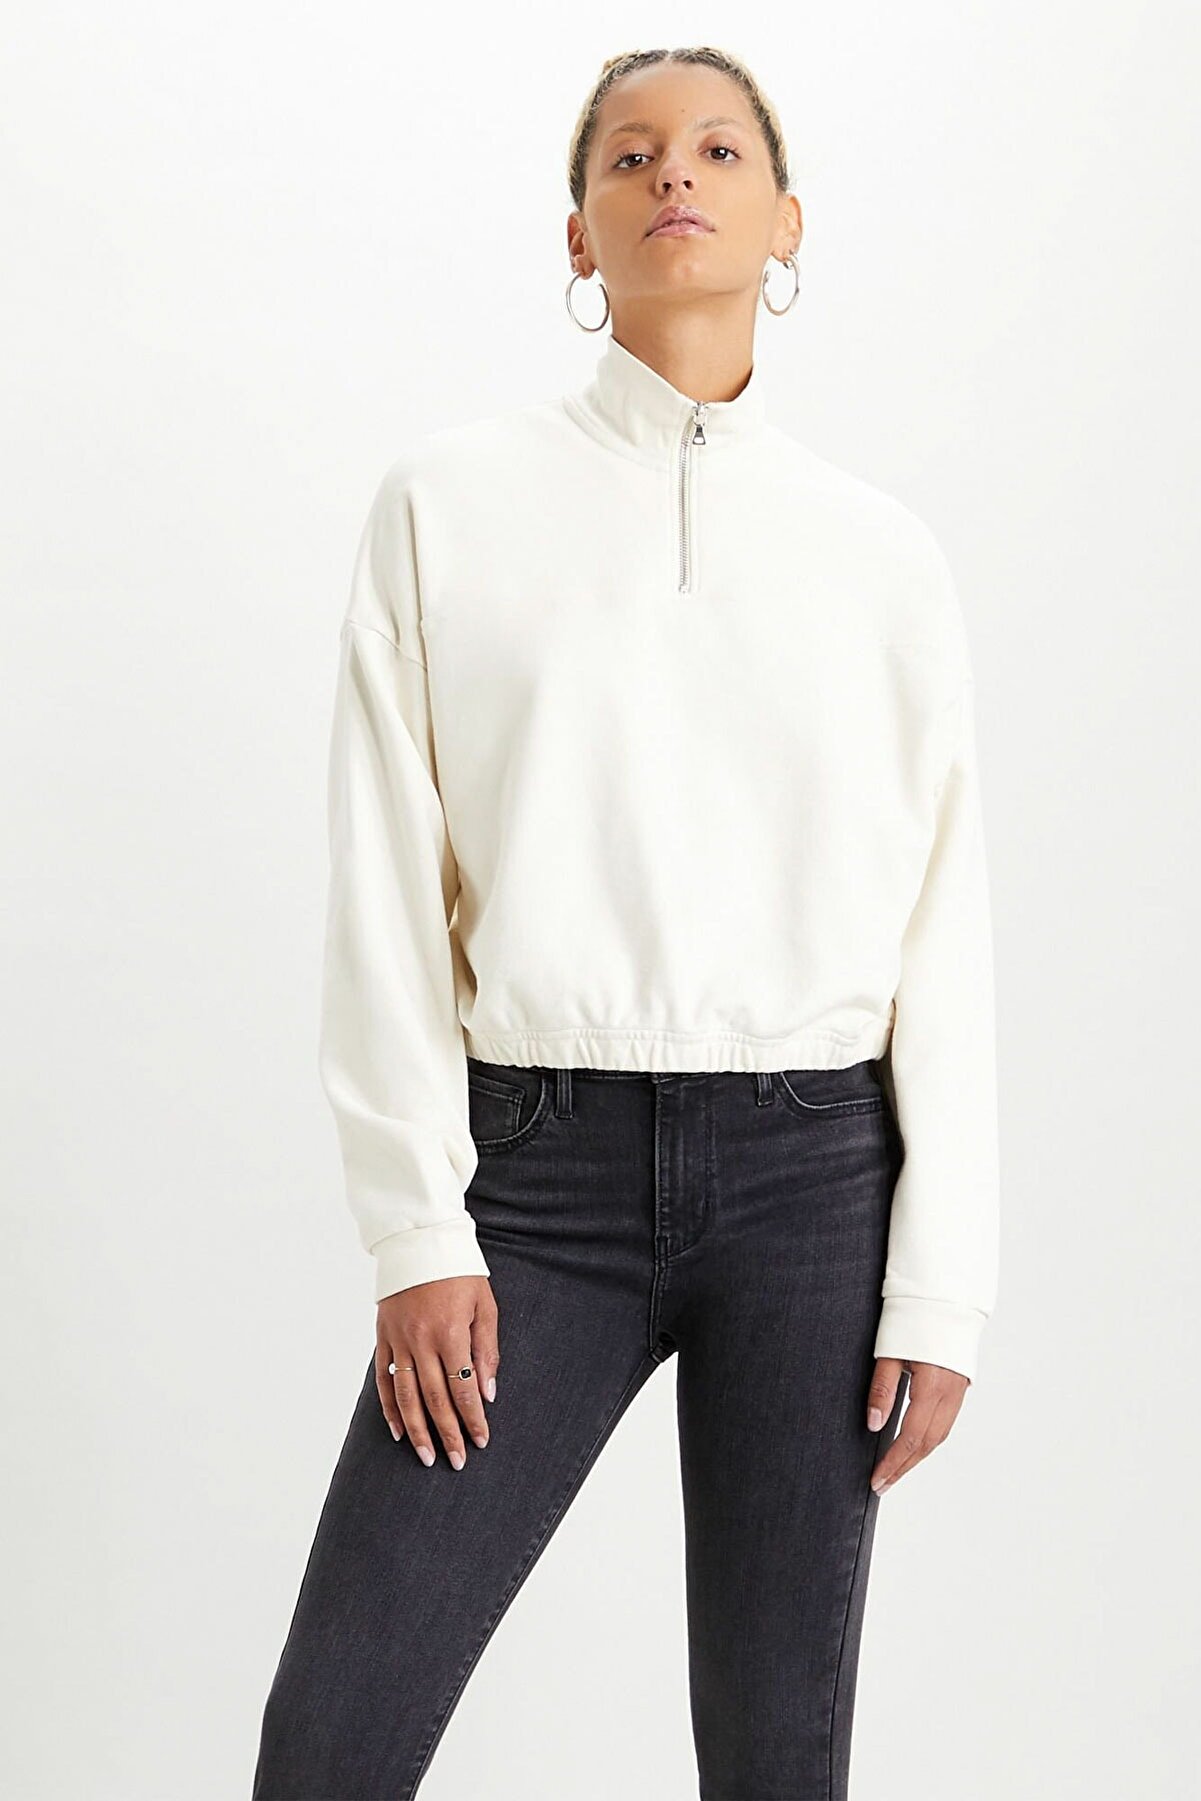 Levi's Kadın Quarter Zip Sweatshirt 21551-0001